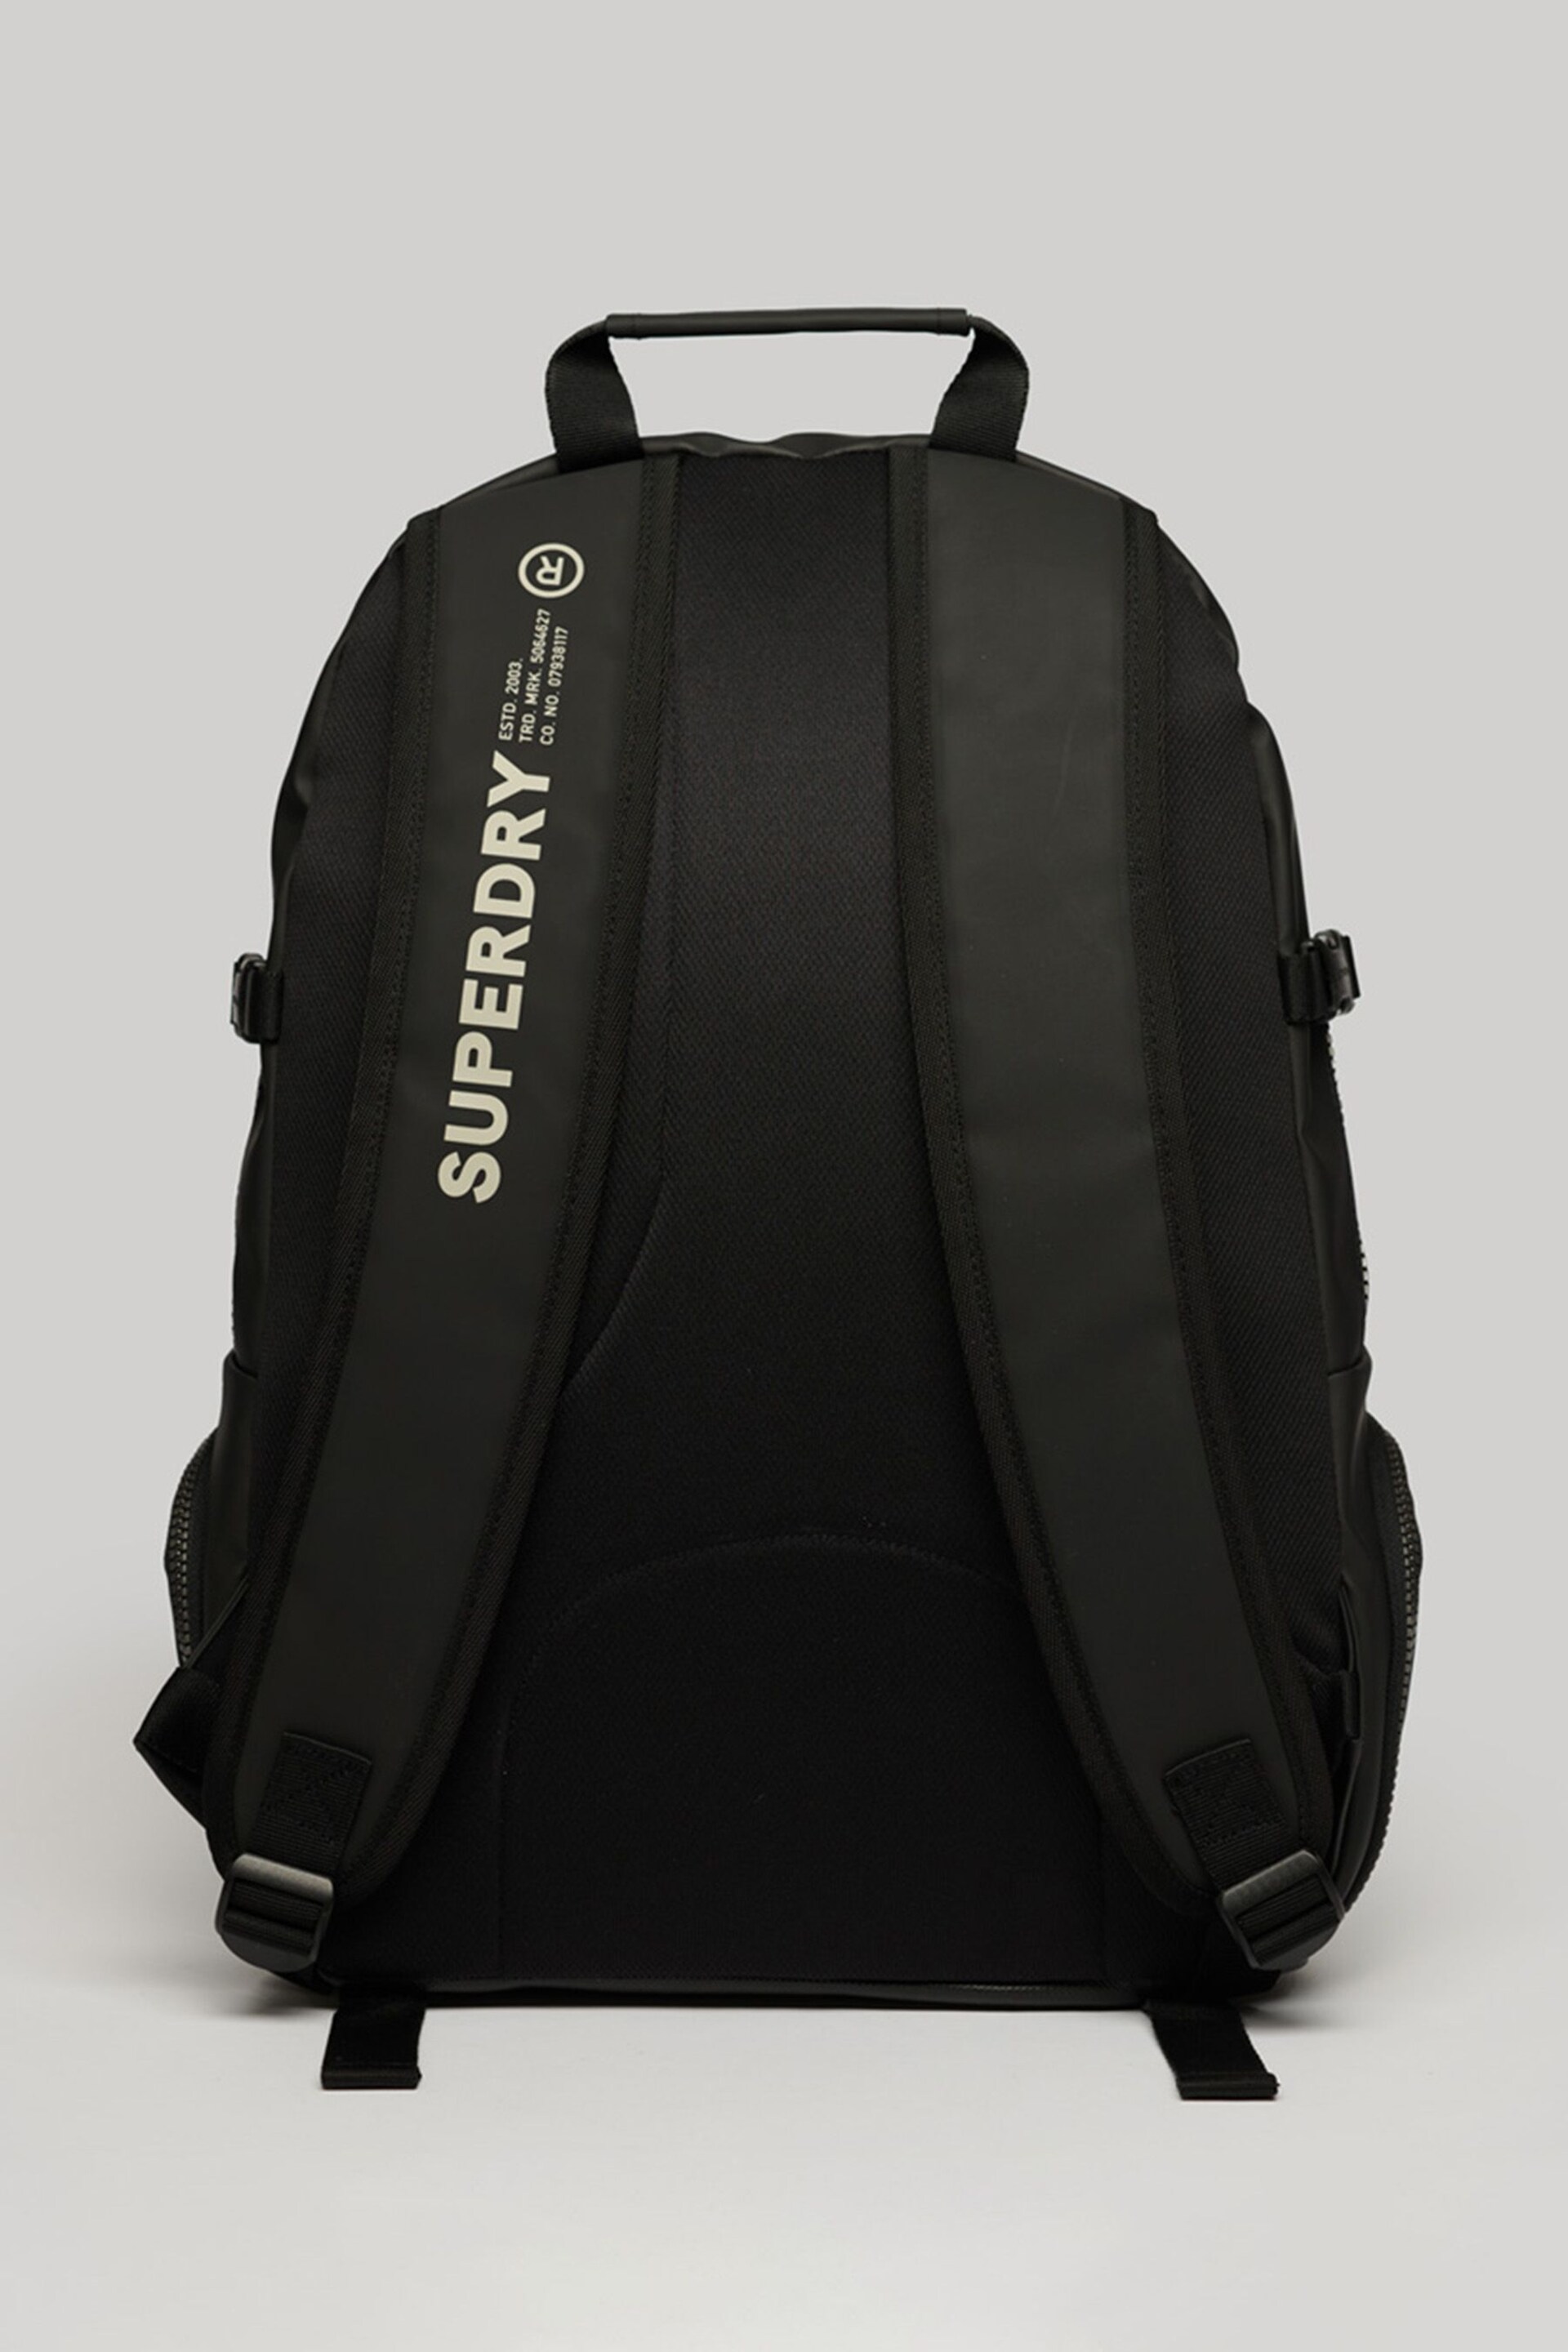 Superdry Black Tarp Rucksack Bag - Image 2 of 5